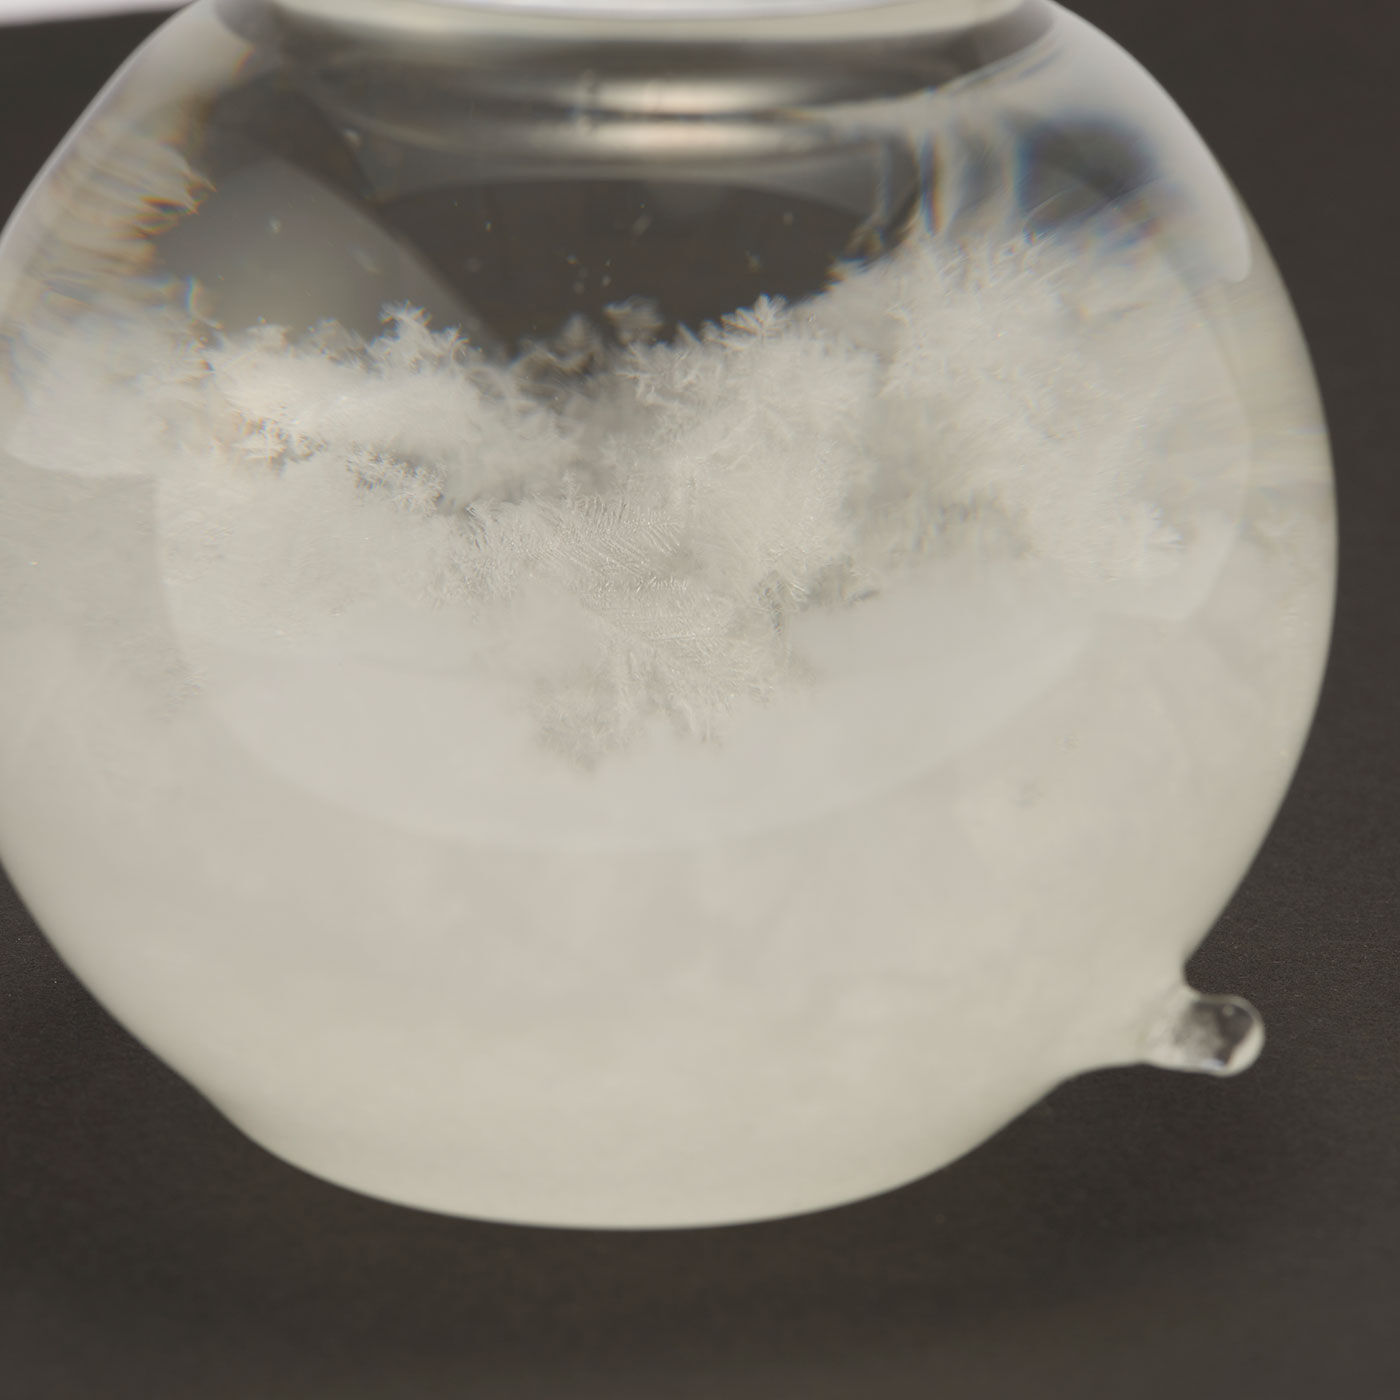 SeeMONO|結晶の変化が楽しみに 雪だるまの形をしたストームグラス|背面下部に小さな突起があります。